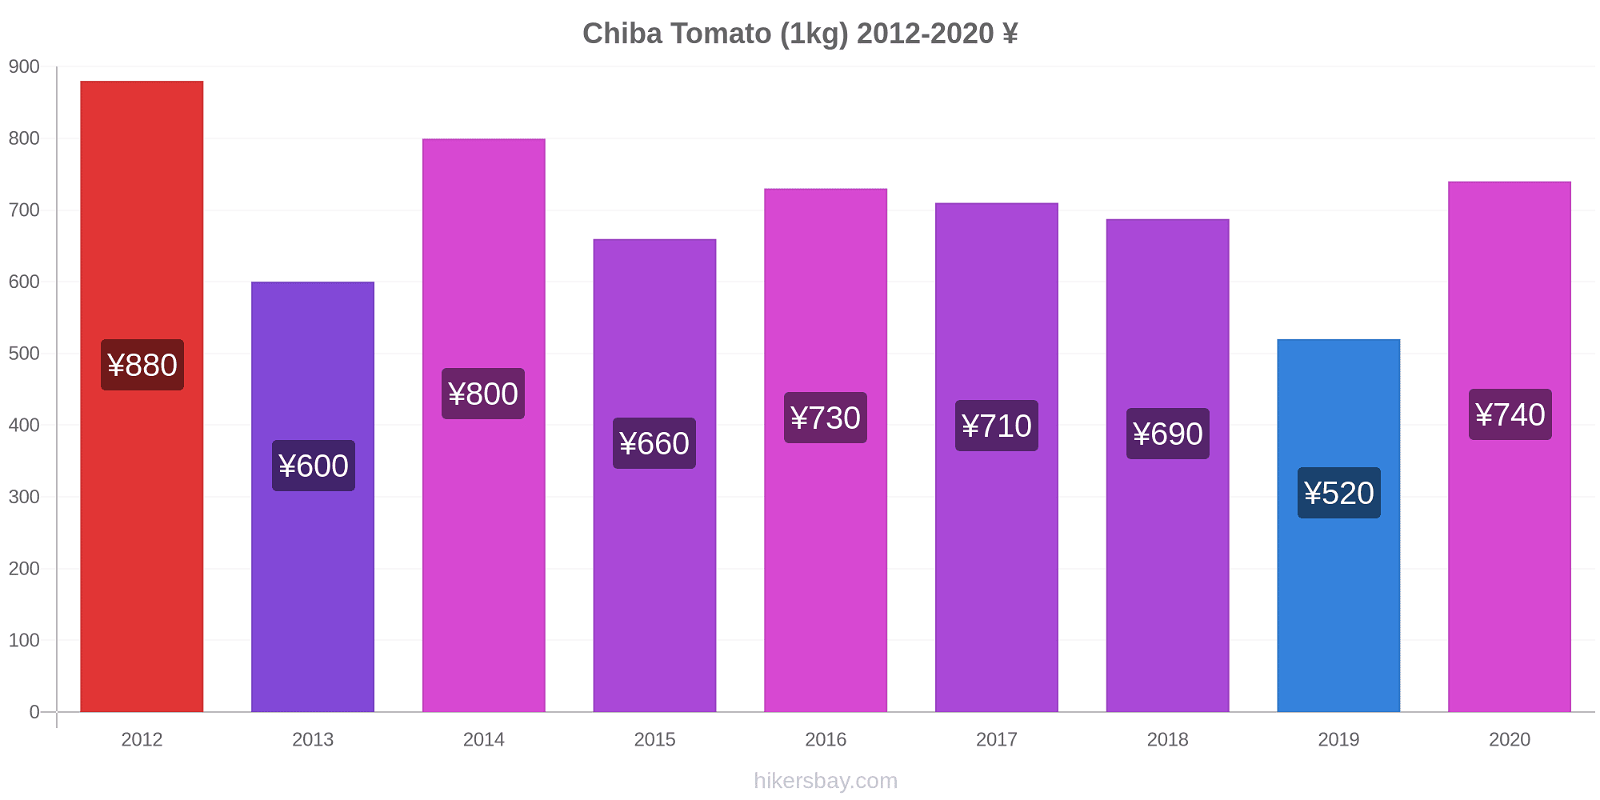 Chiba price changes Tomato (1kg) hikersbay.com